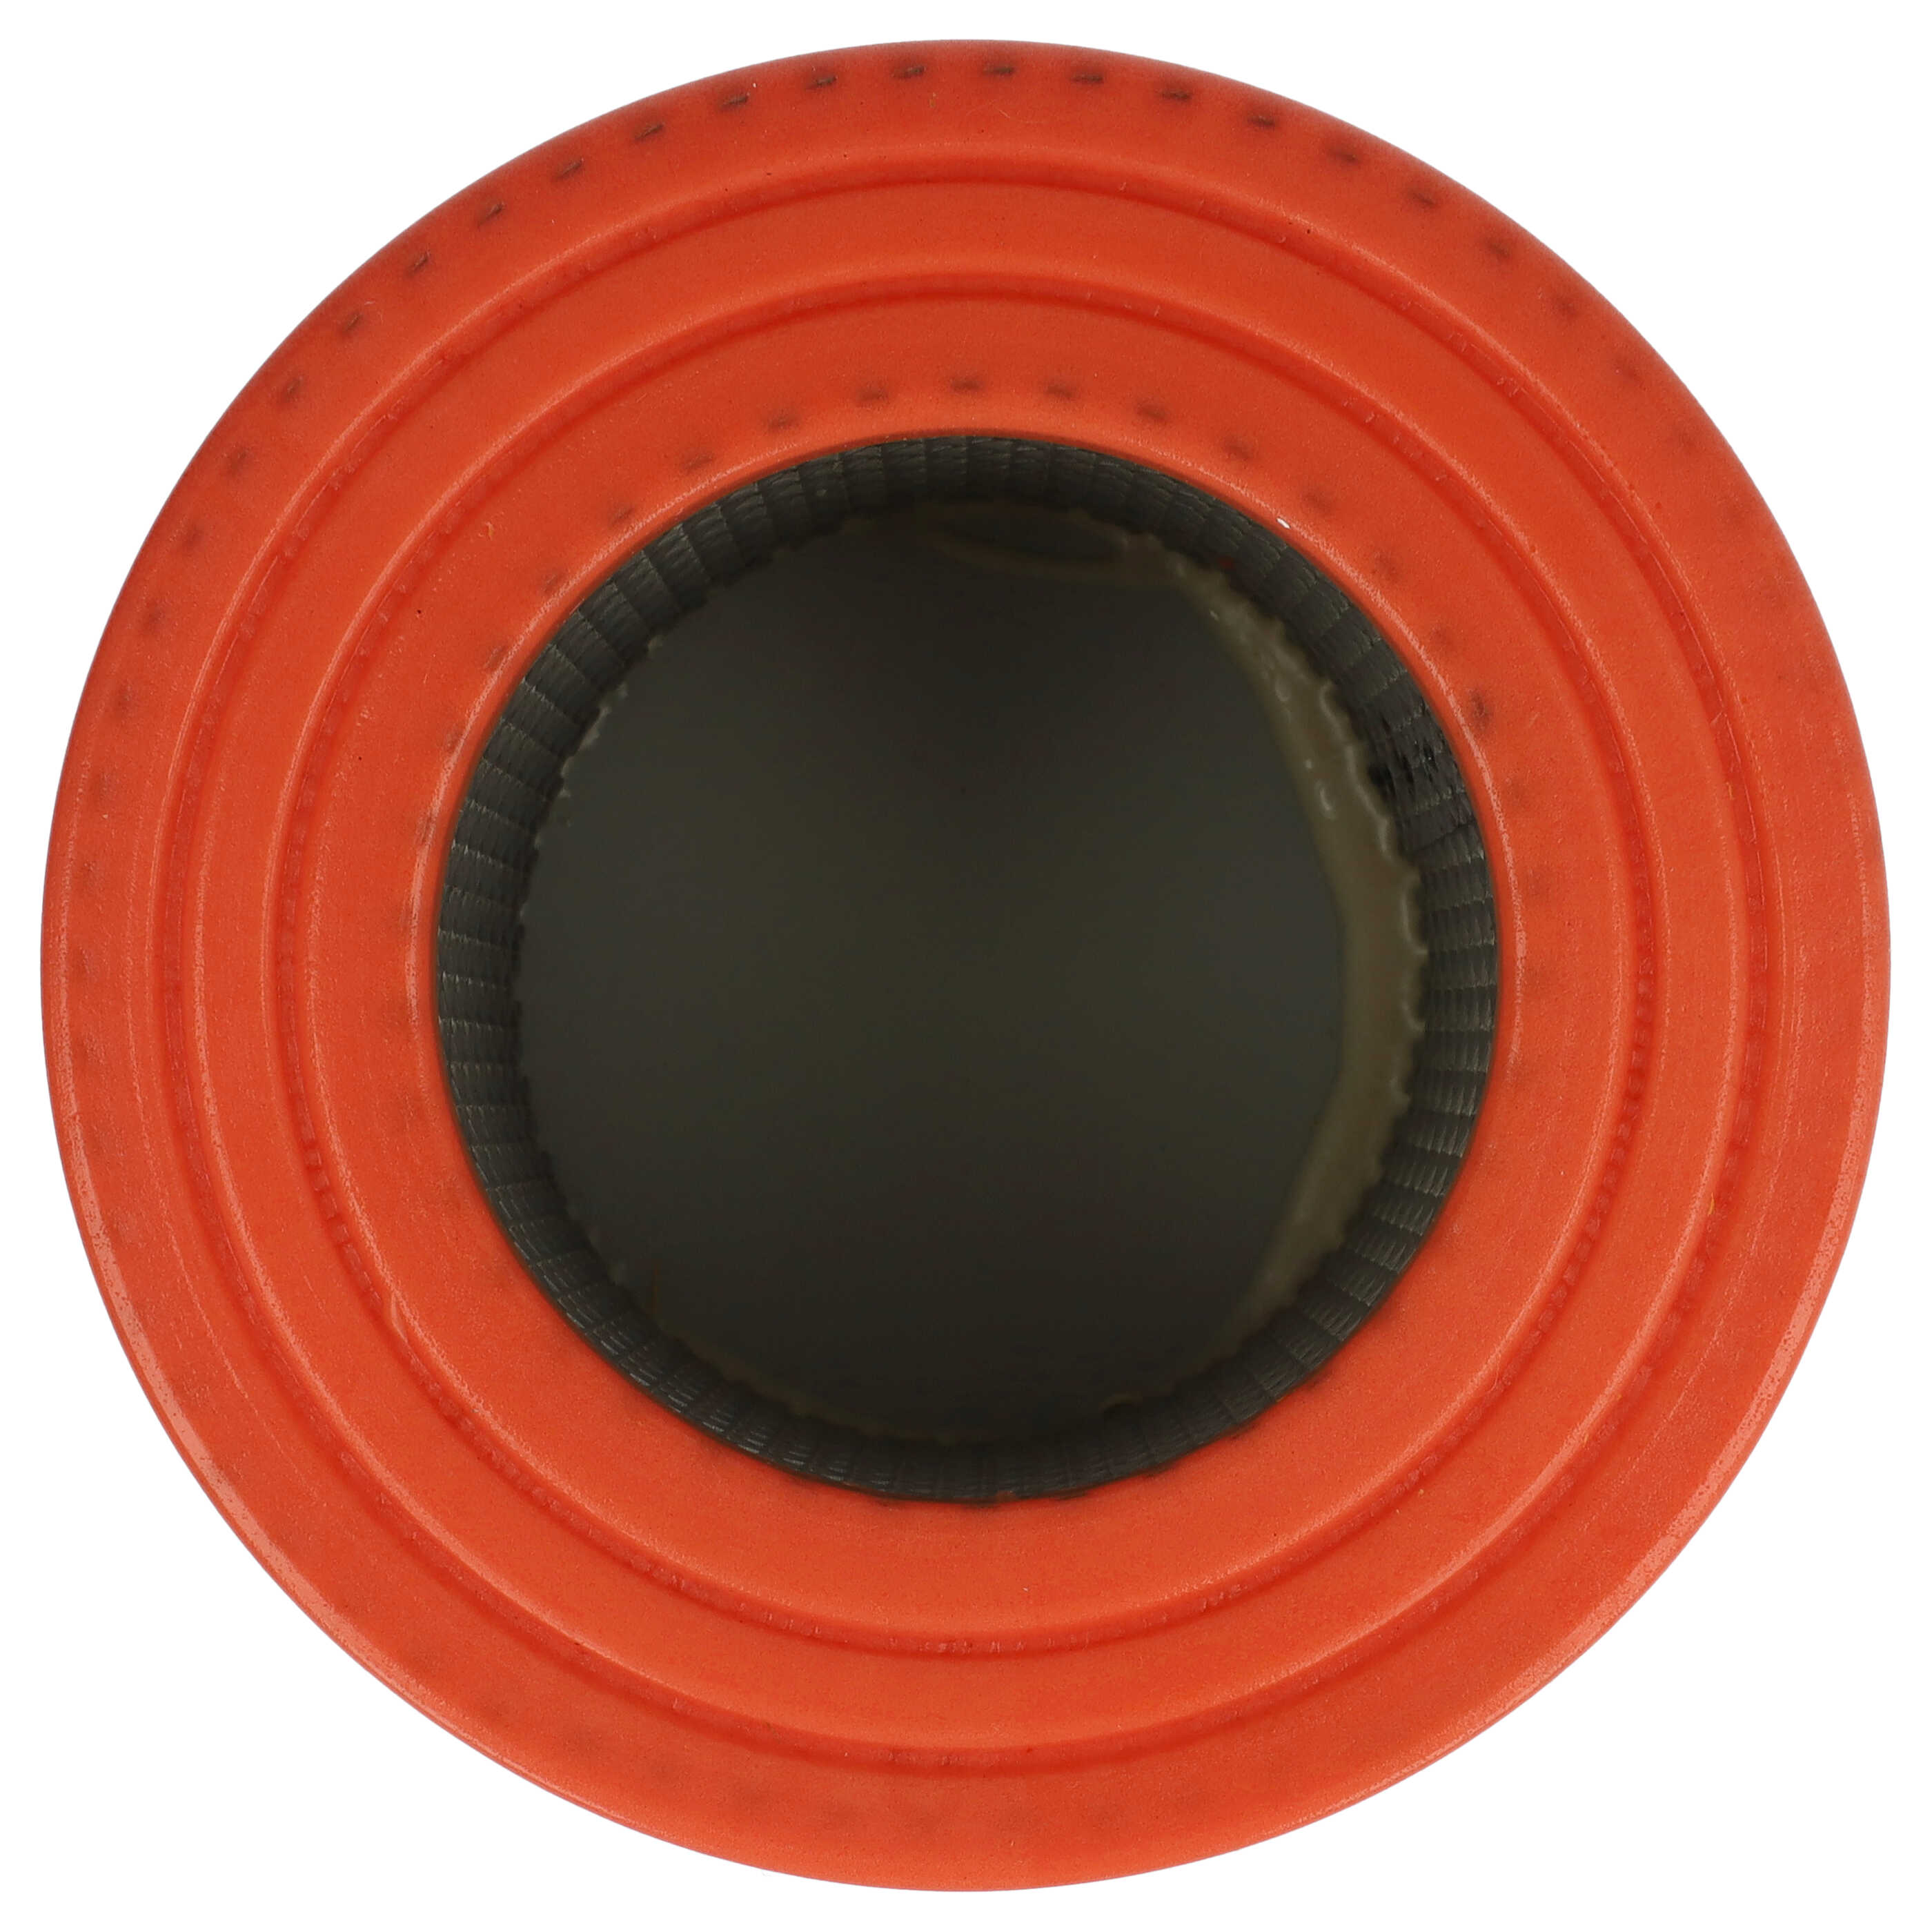 1x cartridge filter replaces Güde 16731 for Güde Chimney Sweep Vacuum, black / orange / white / grey